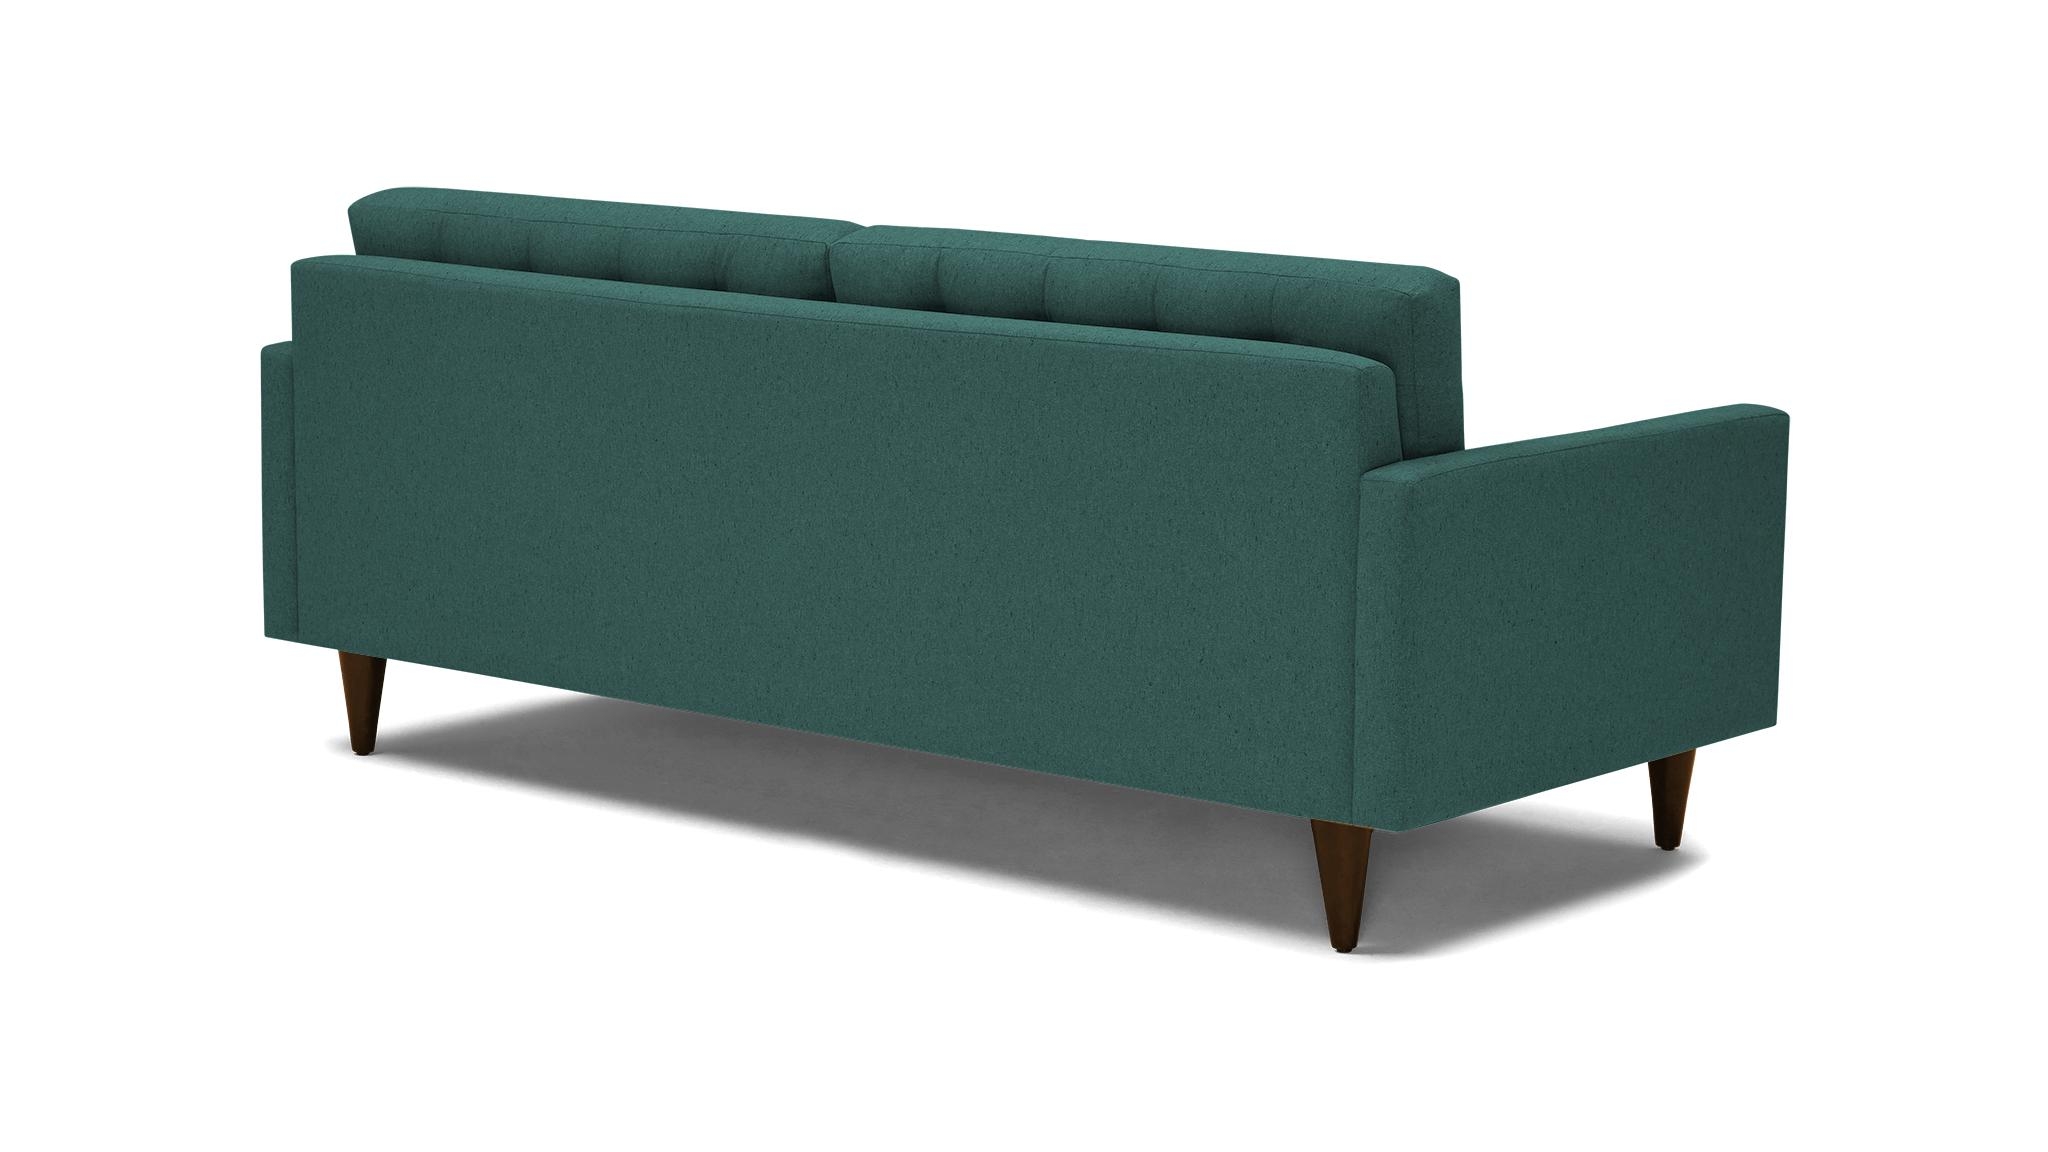 Blue Eliot Mid Century Modern Sofa - Prime Peacock - Mocha - Image 3